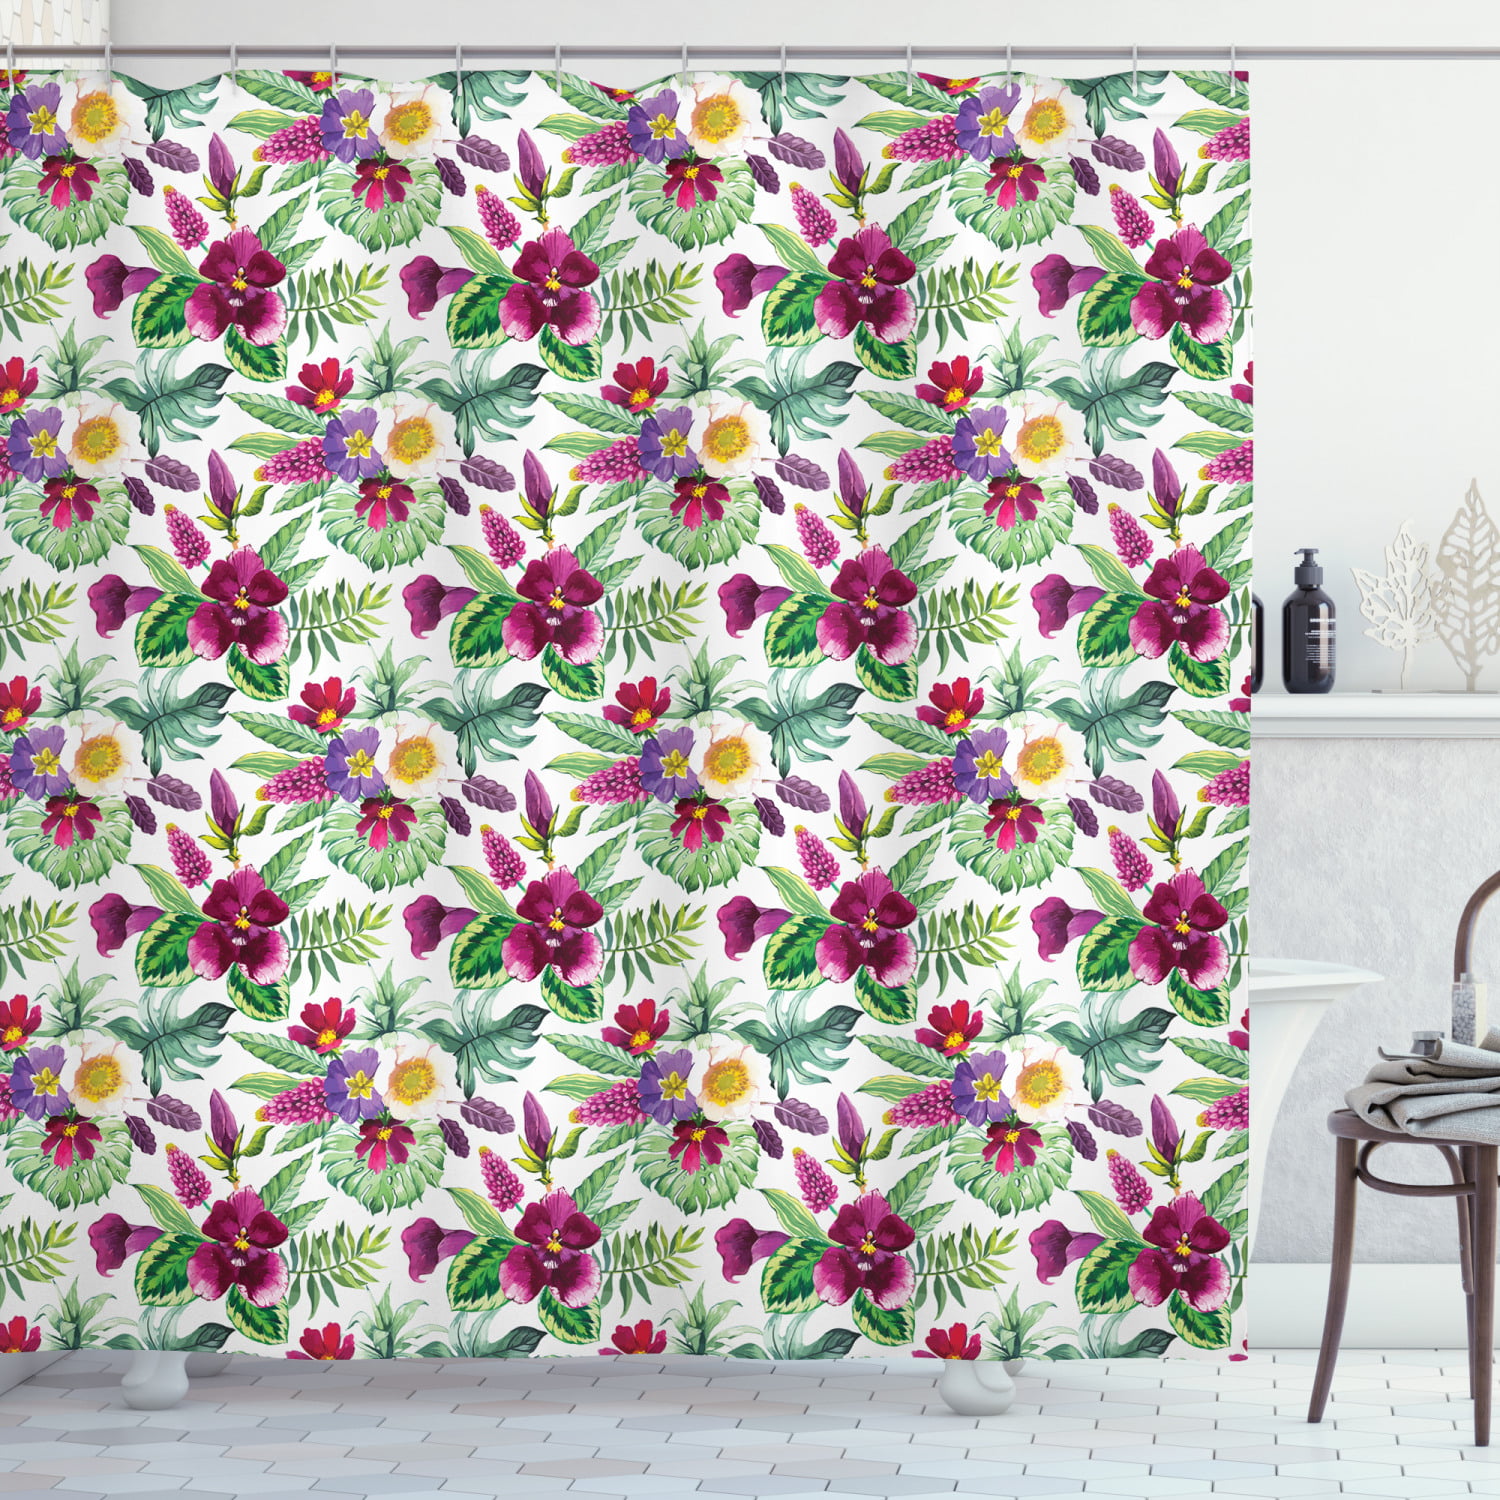 72x72'' Cala Lilly on Black Bathroom Shower Curtain Waterproof Fabric 12 Hooks 